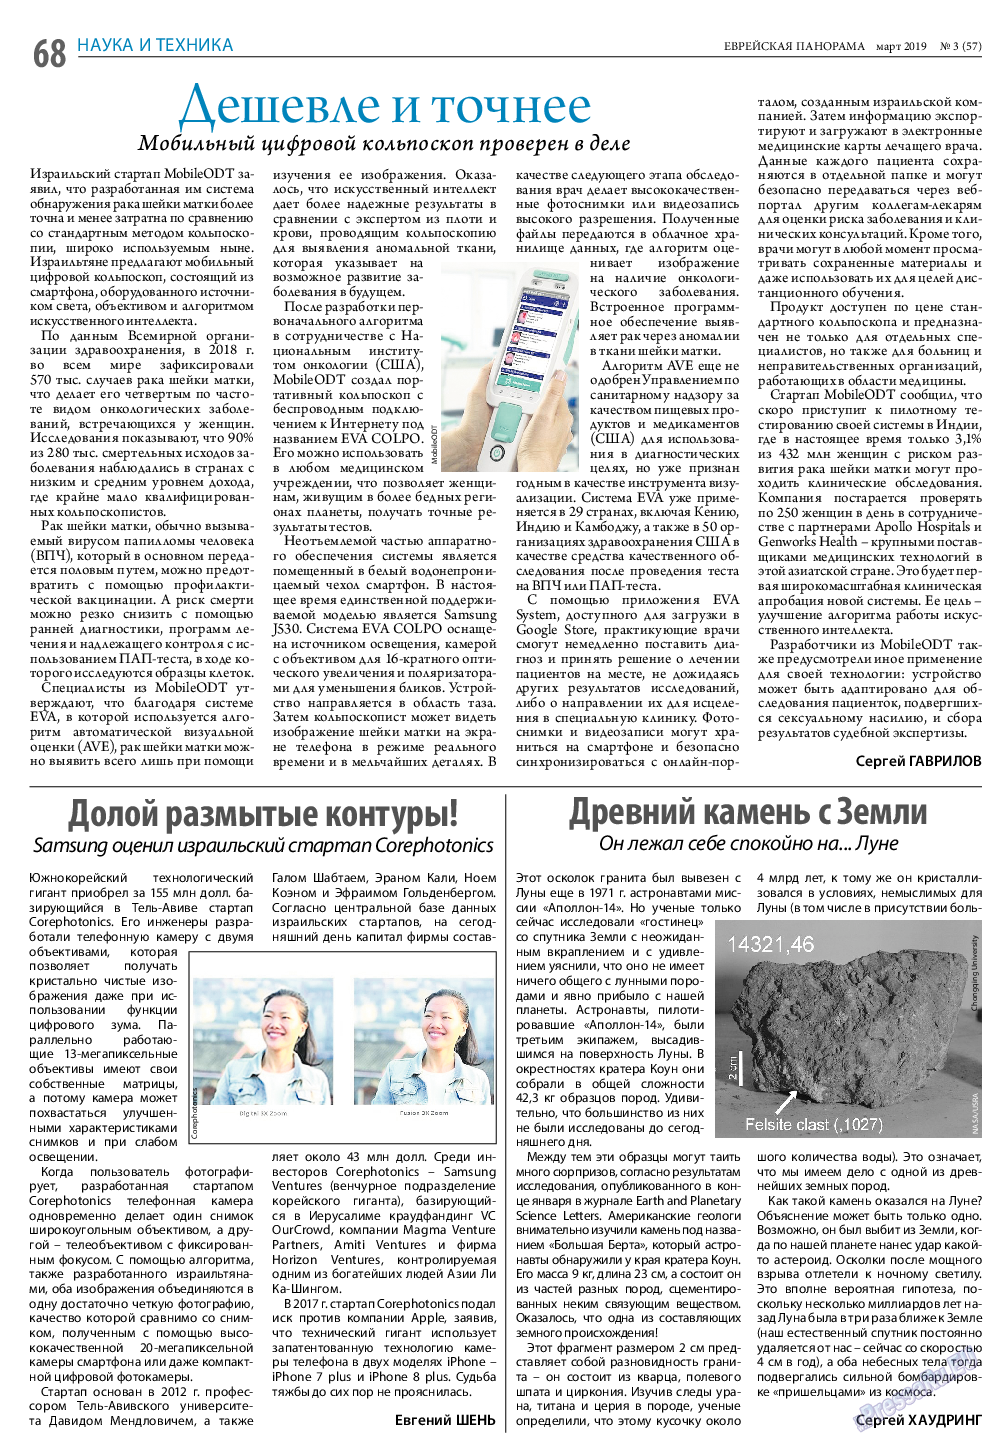 Еврейская панорама, газета. 2019 №3 стр.68